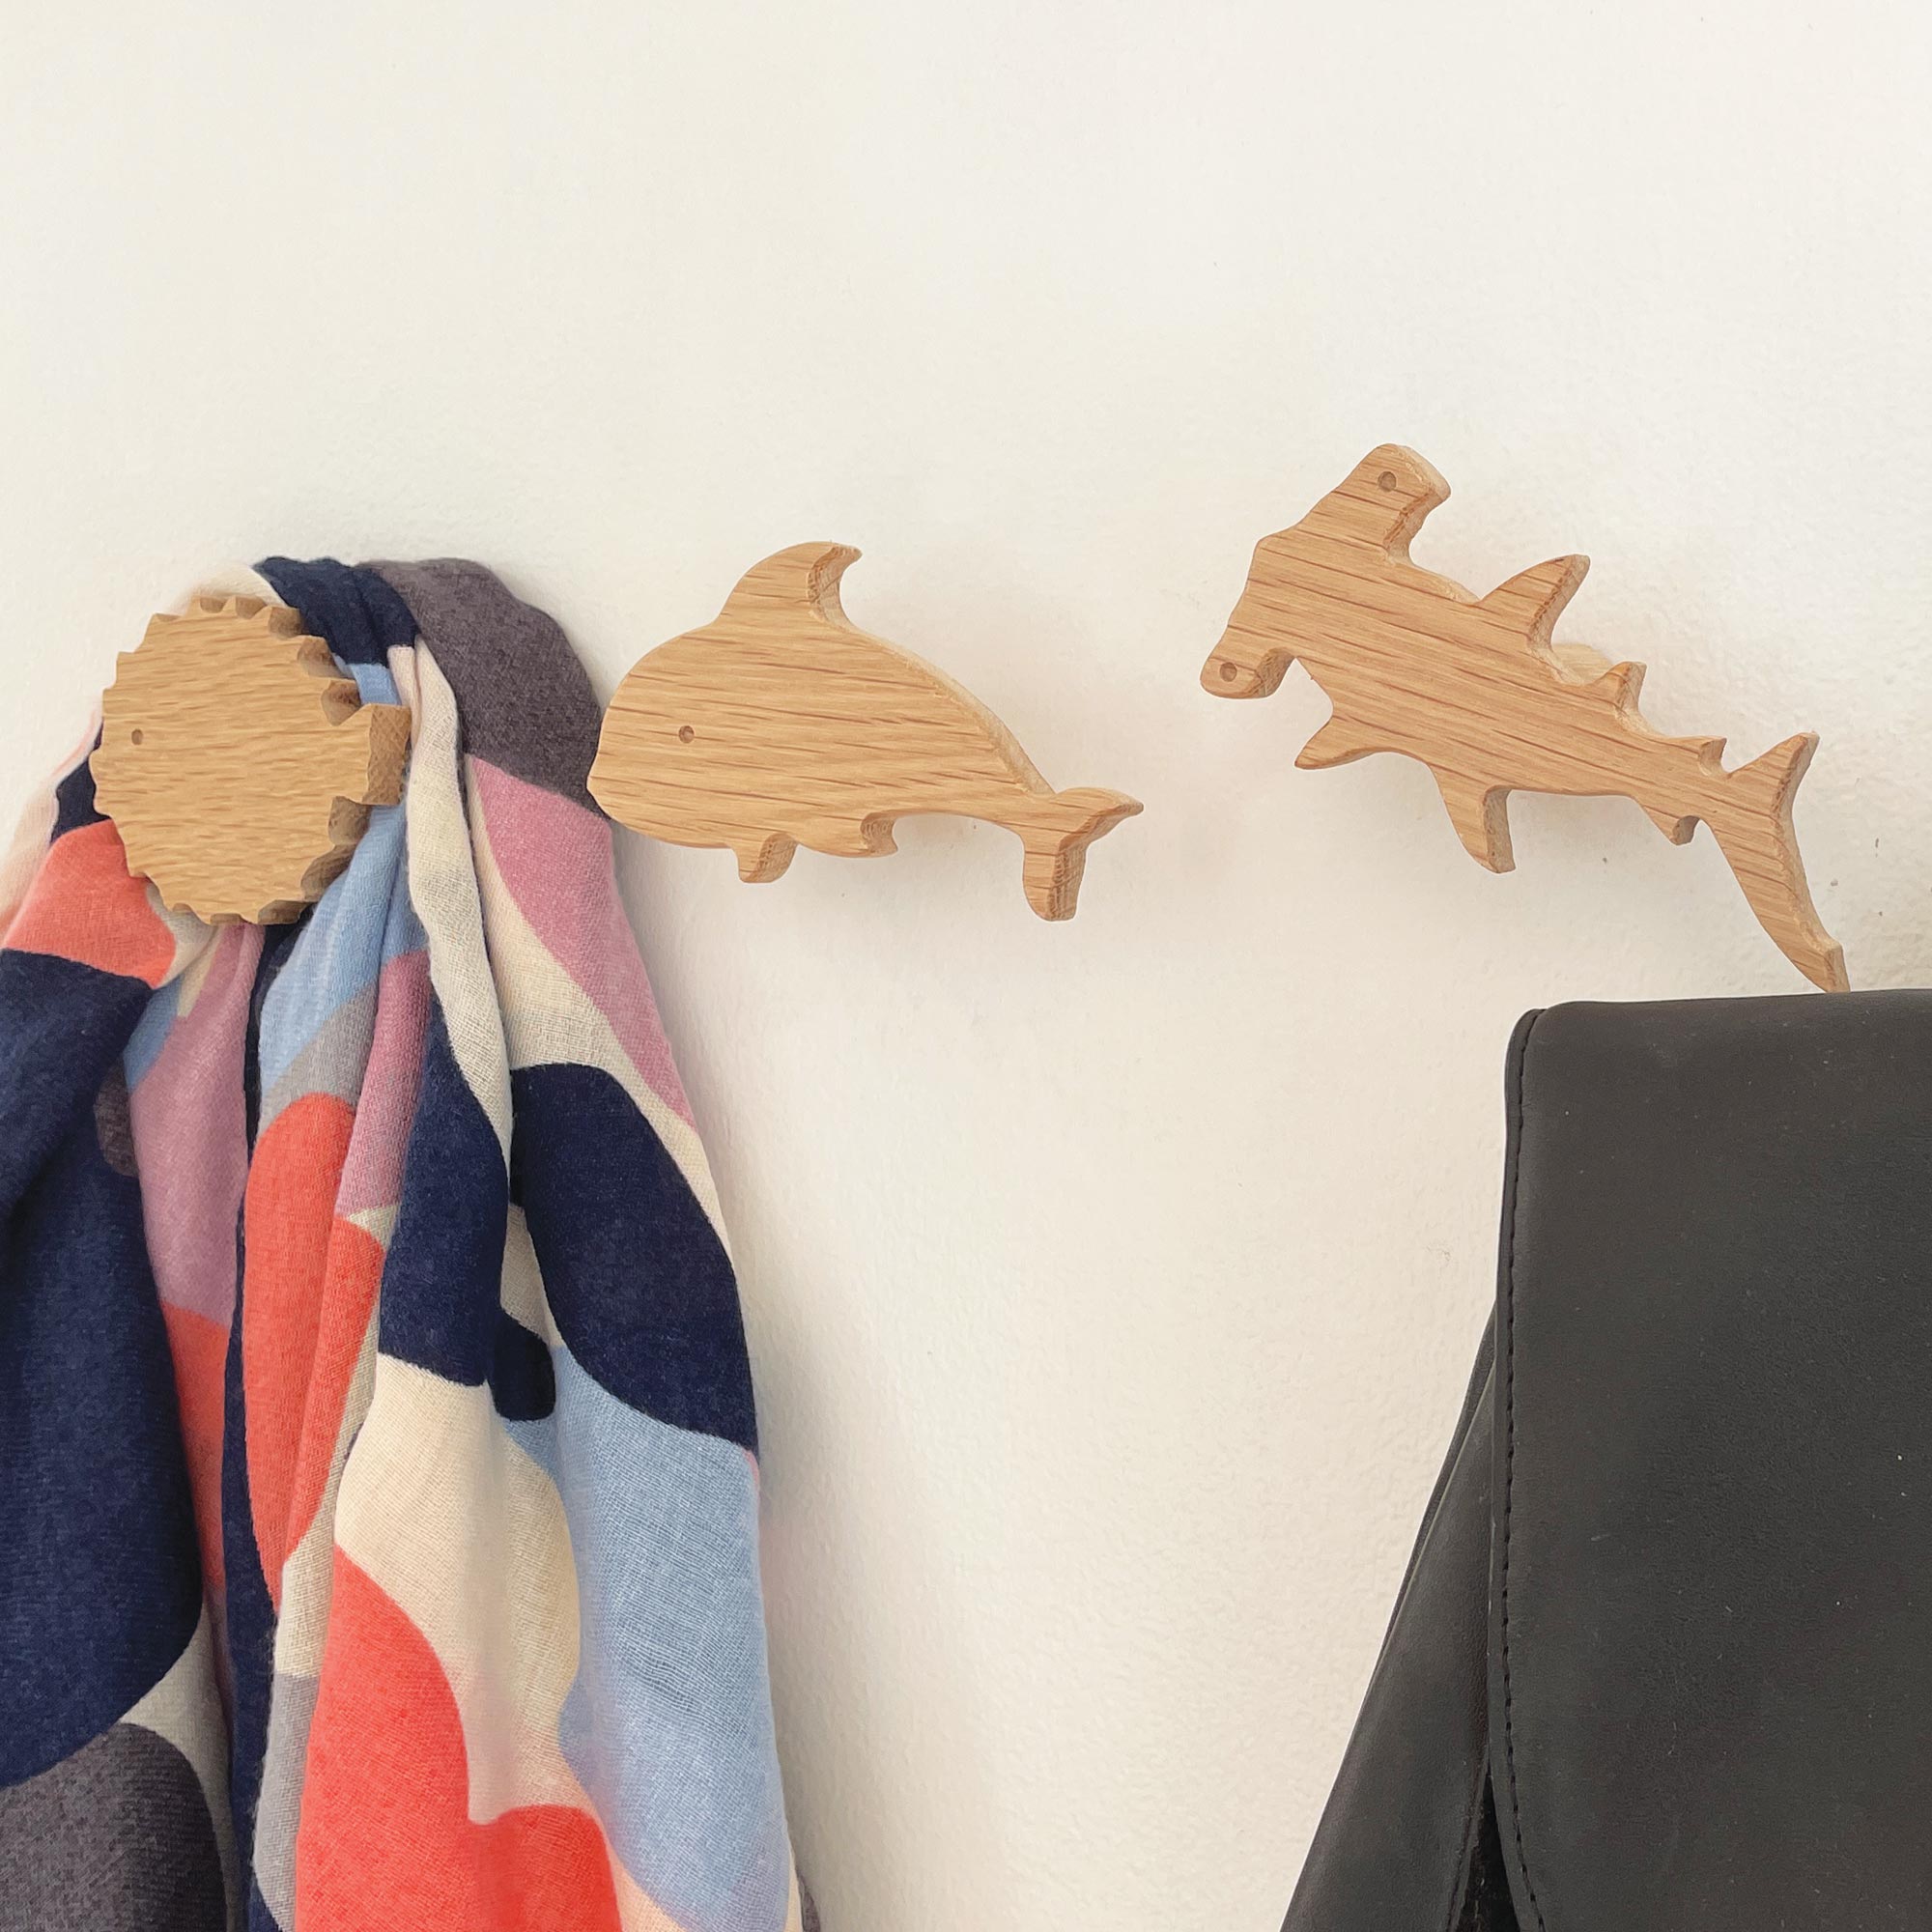 Ocean animal wall hooks for nursery decor – Wood and Whistles